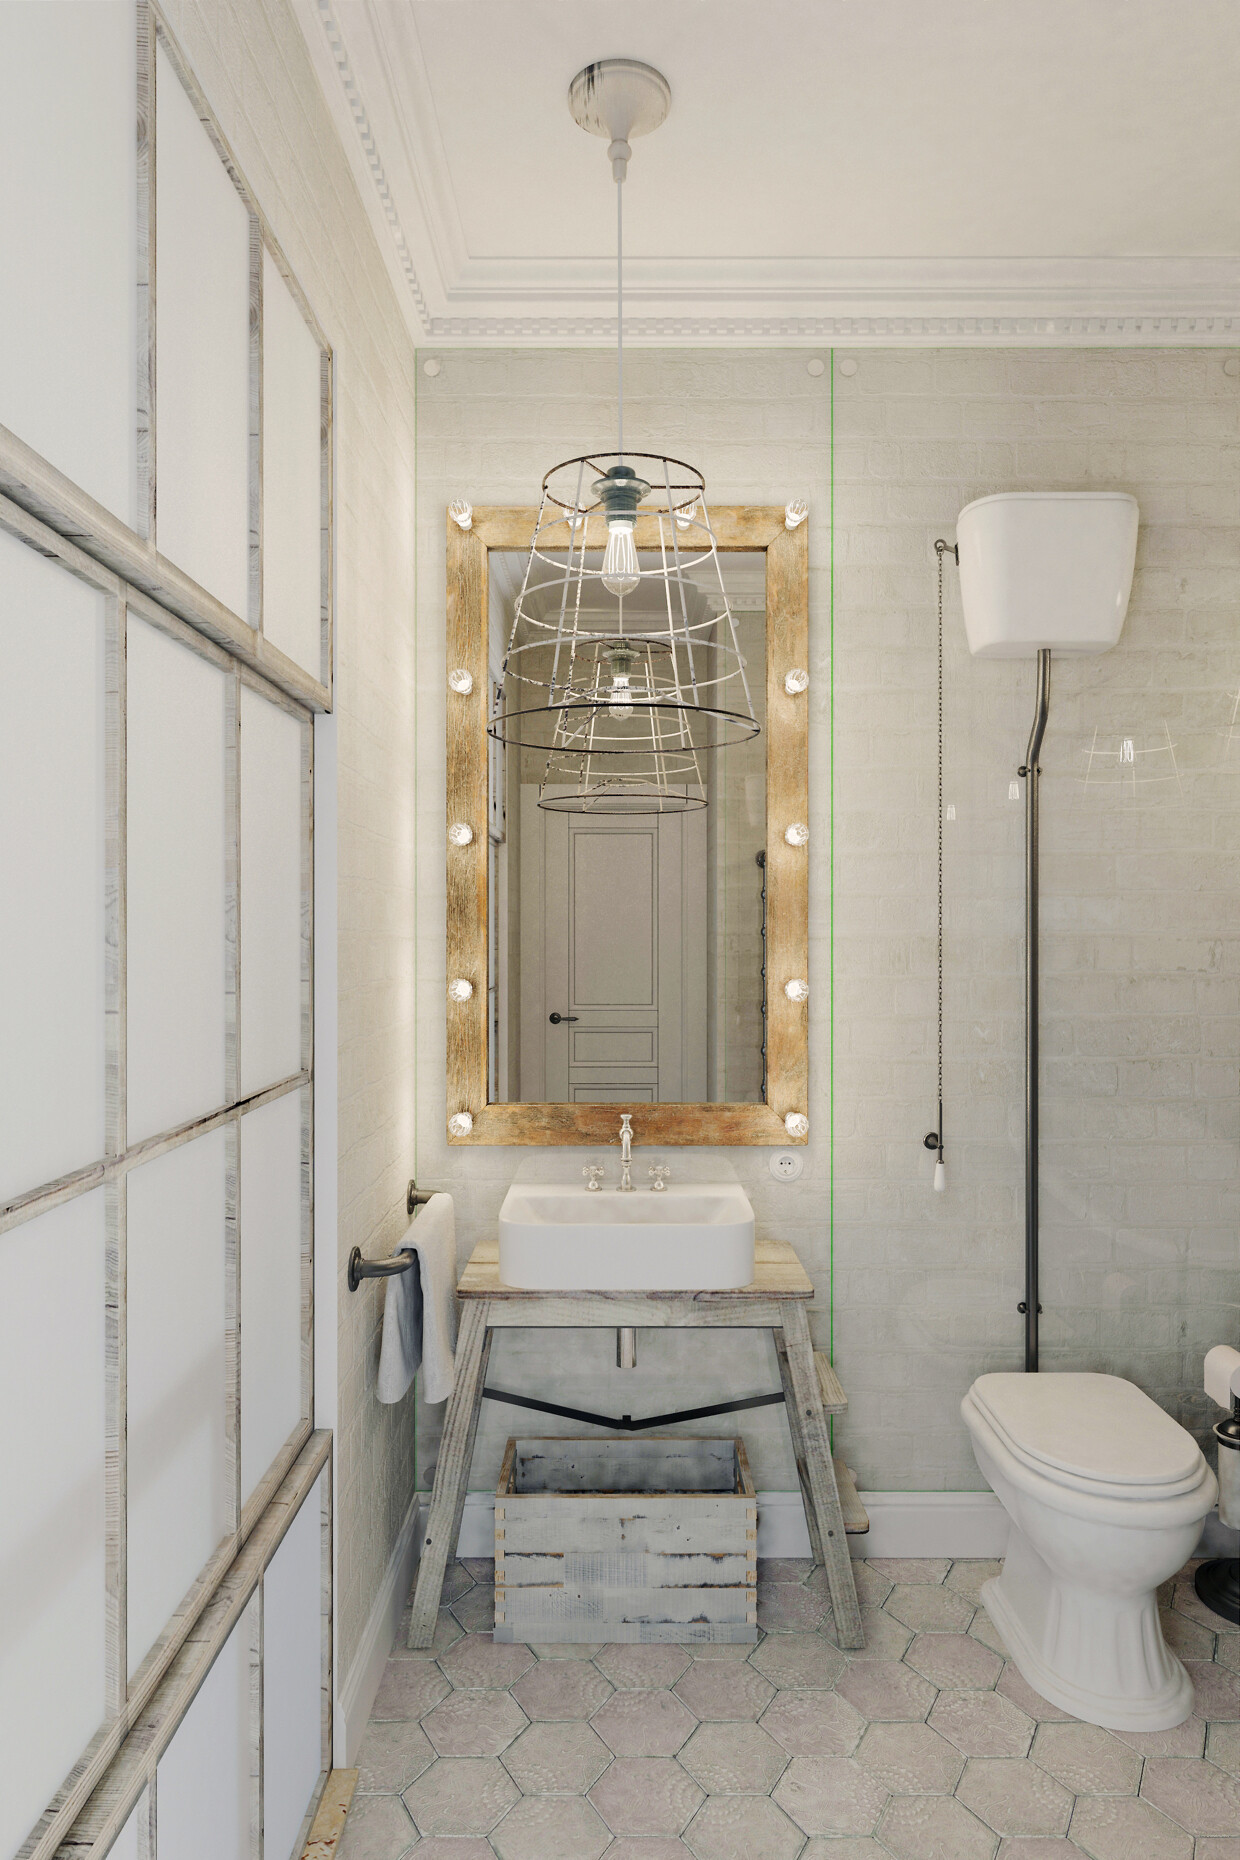 Apartment Prague with a completely white interior - Anton Medvedev - HomeWorldDesign (12)